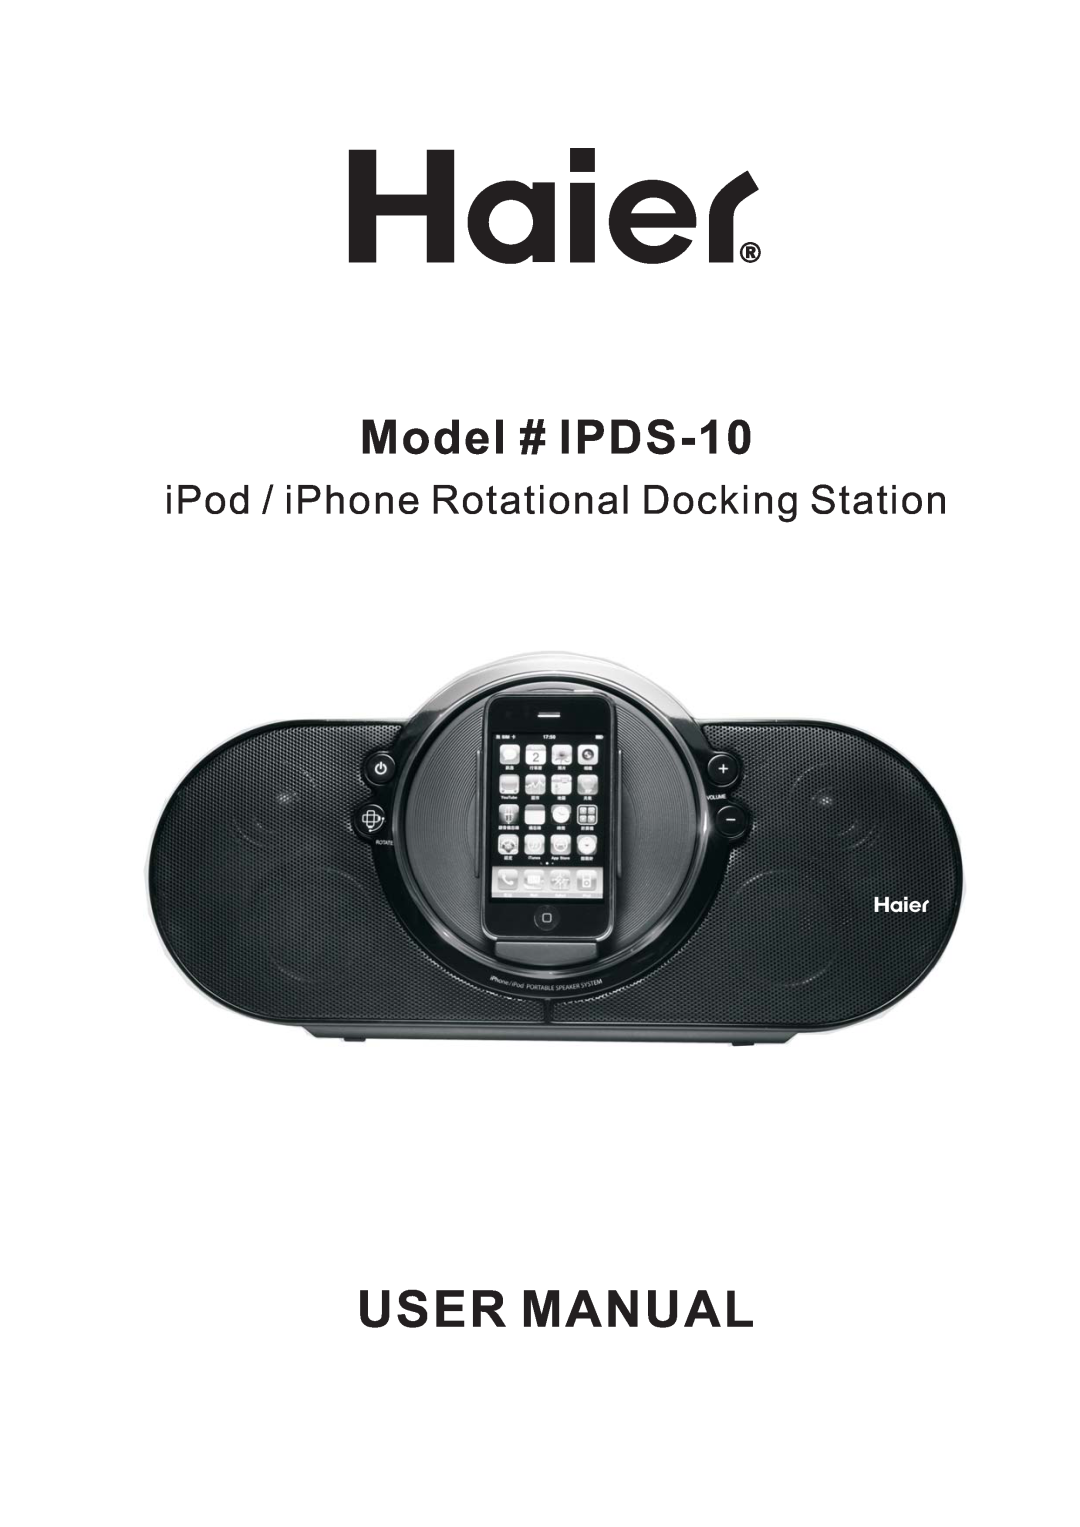 Haier user manual Model # IPDS-10, iPod / iPhone Rotational Docking Station 